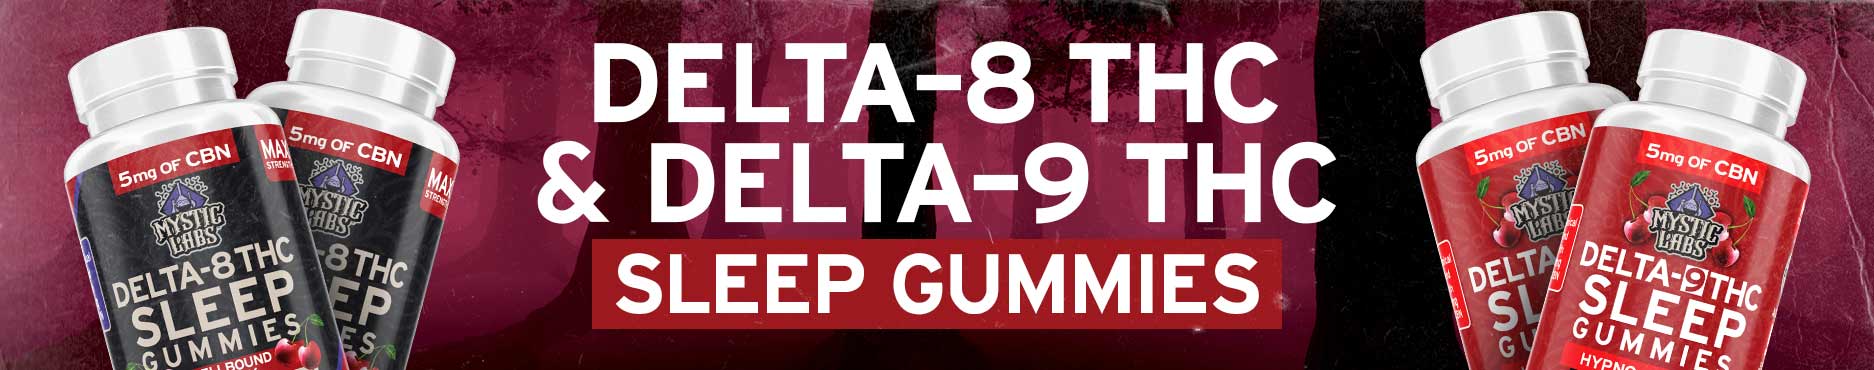 Delta 8 and Delta 9 Sleep Gummies